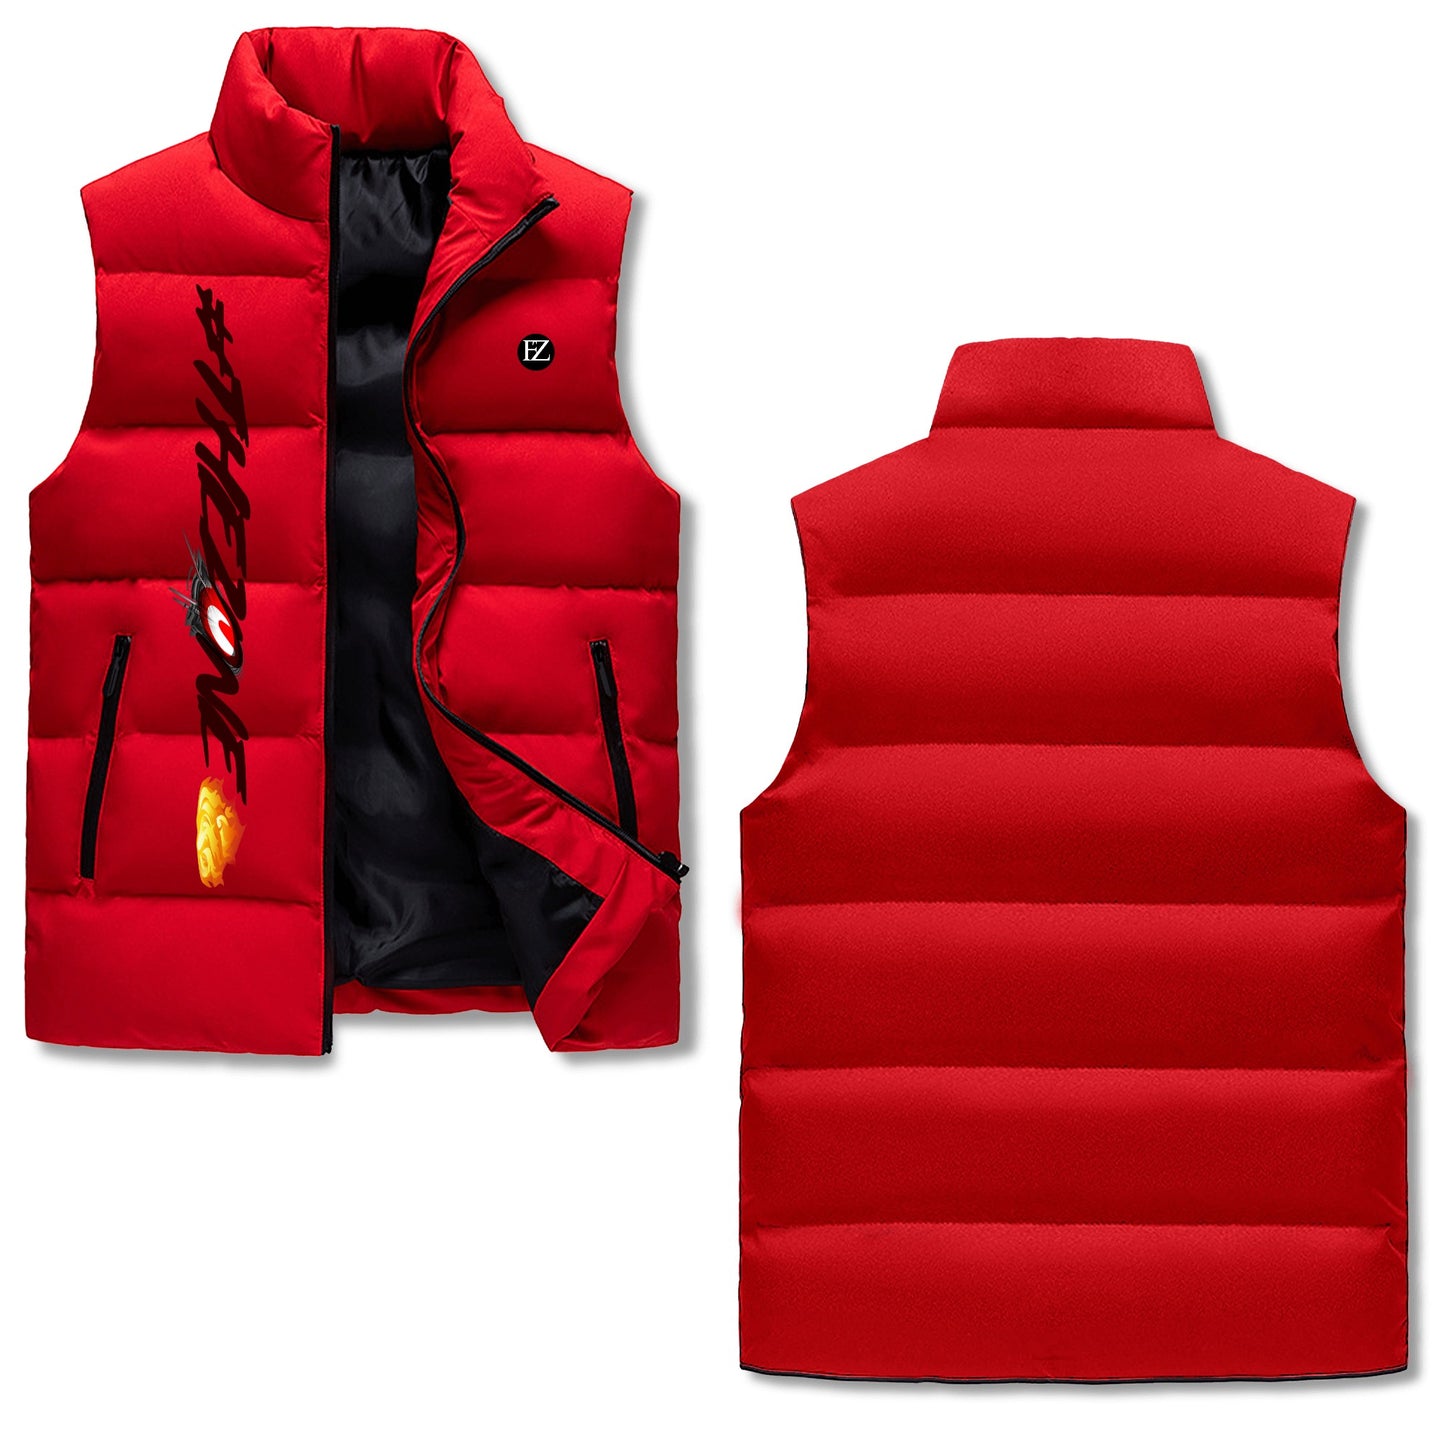 FZ Men's Warm Stand Collar Zip Up Puffer Jacket - FZwear